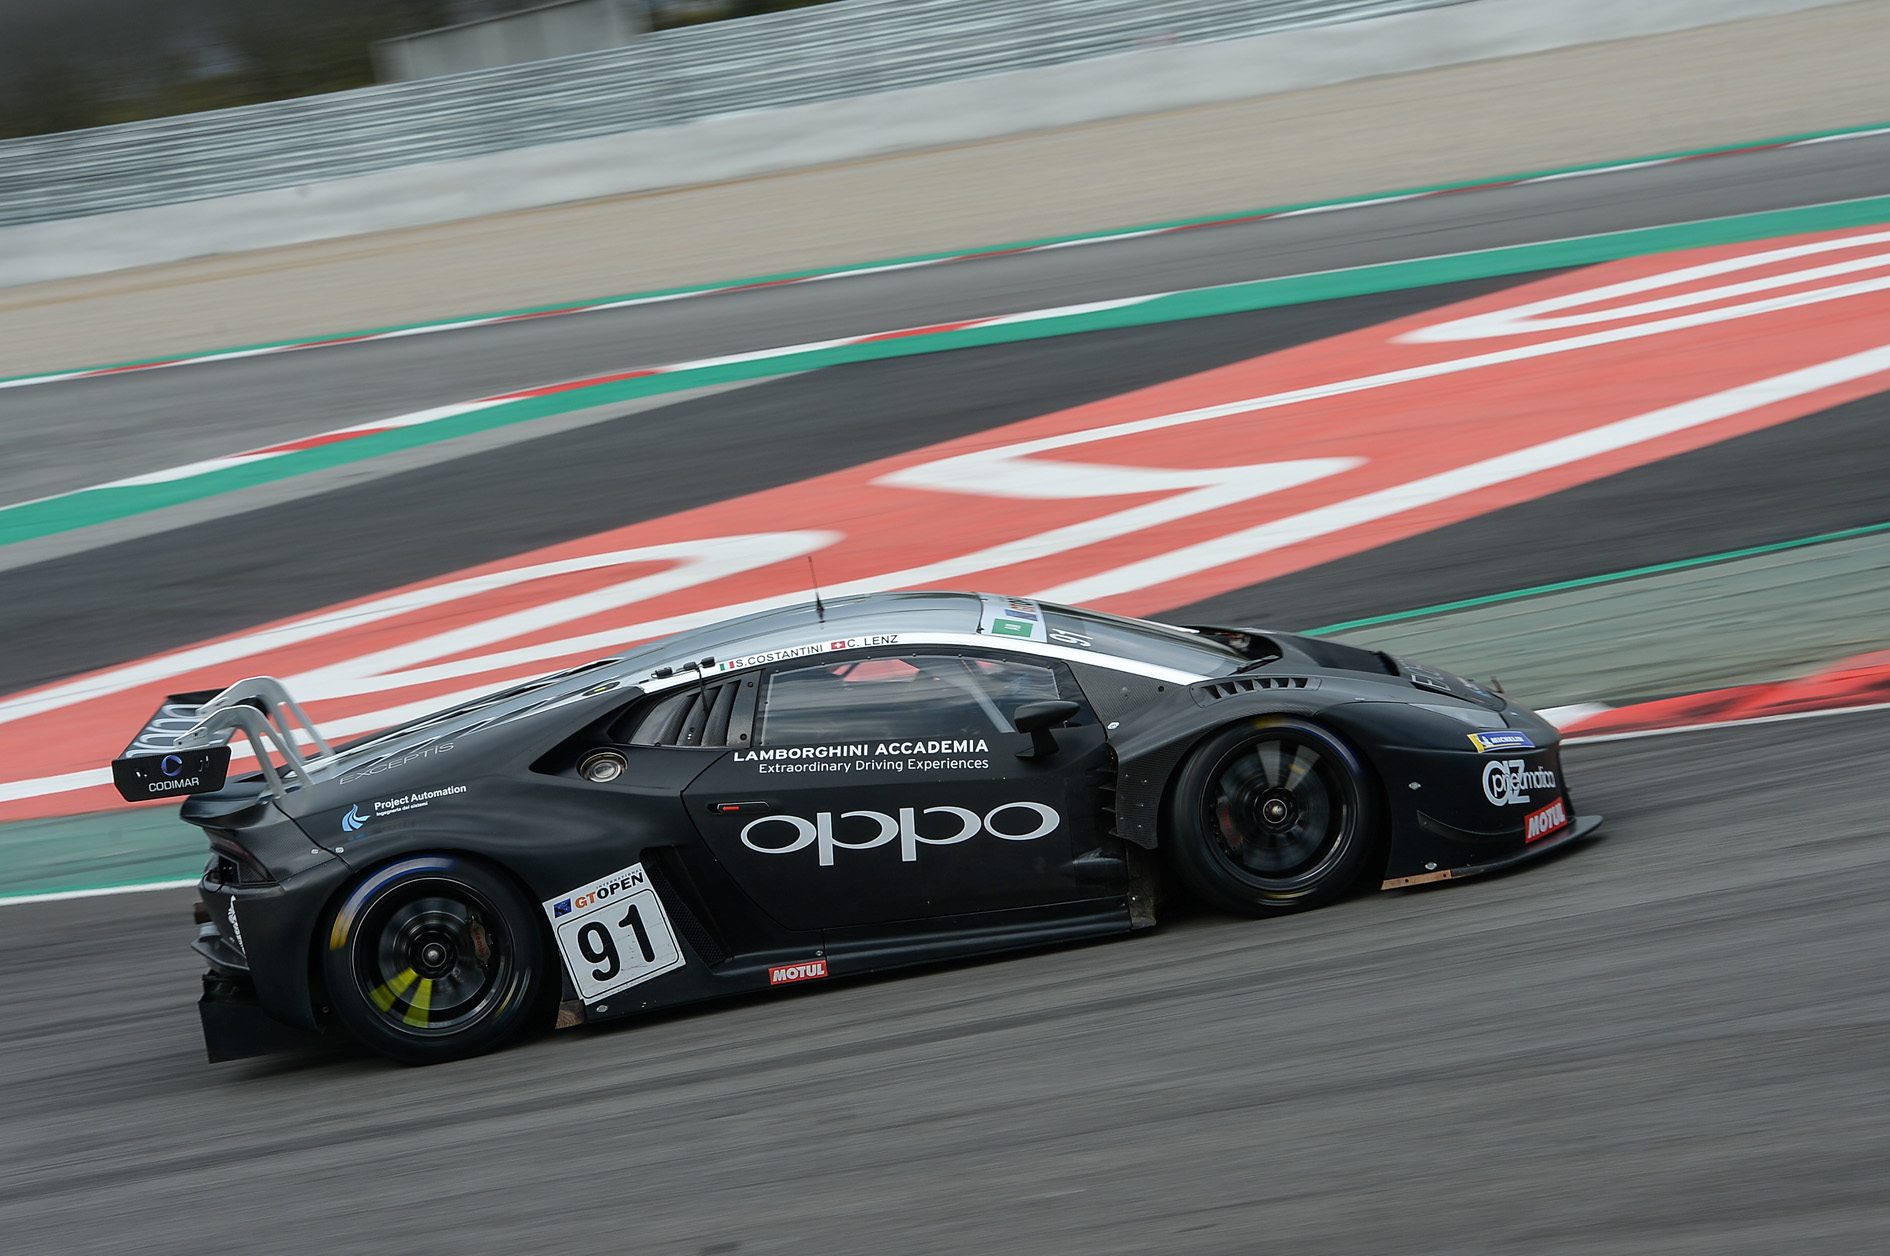  Target Racing enters 24H Dubai with a top line-up